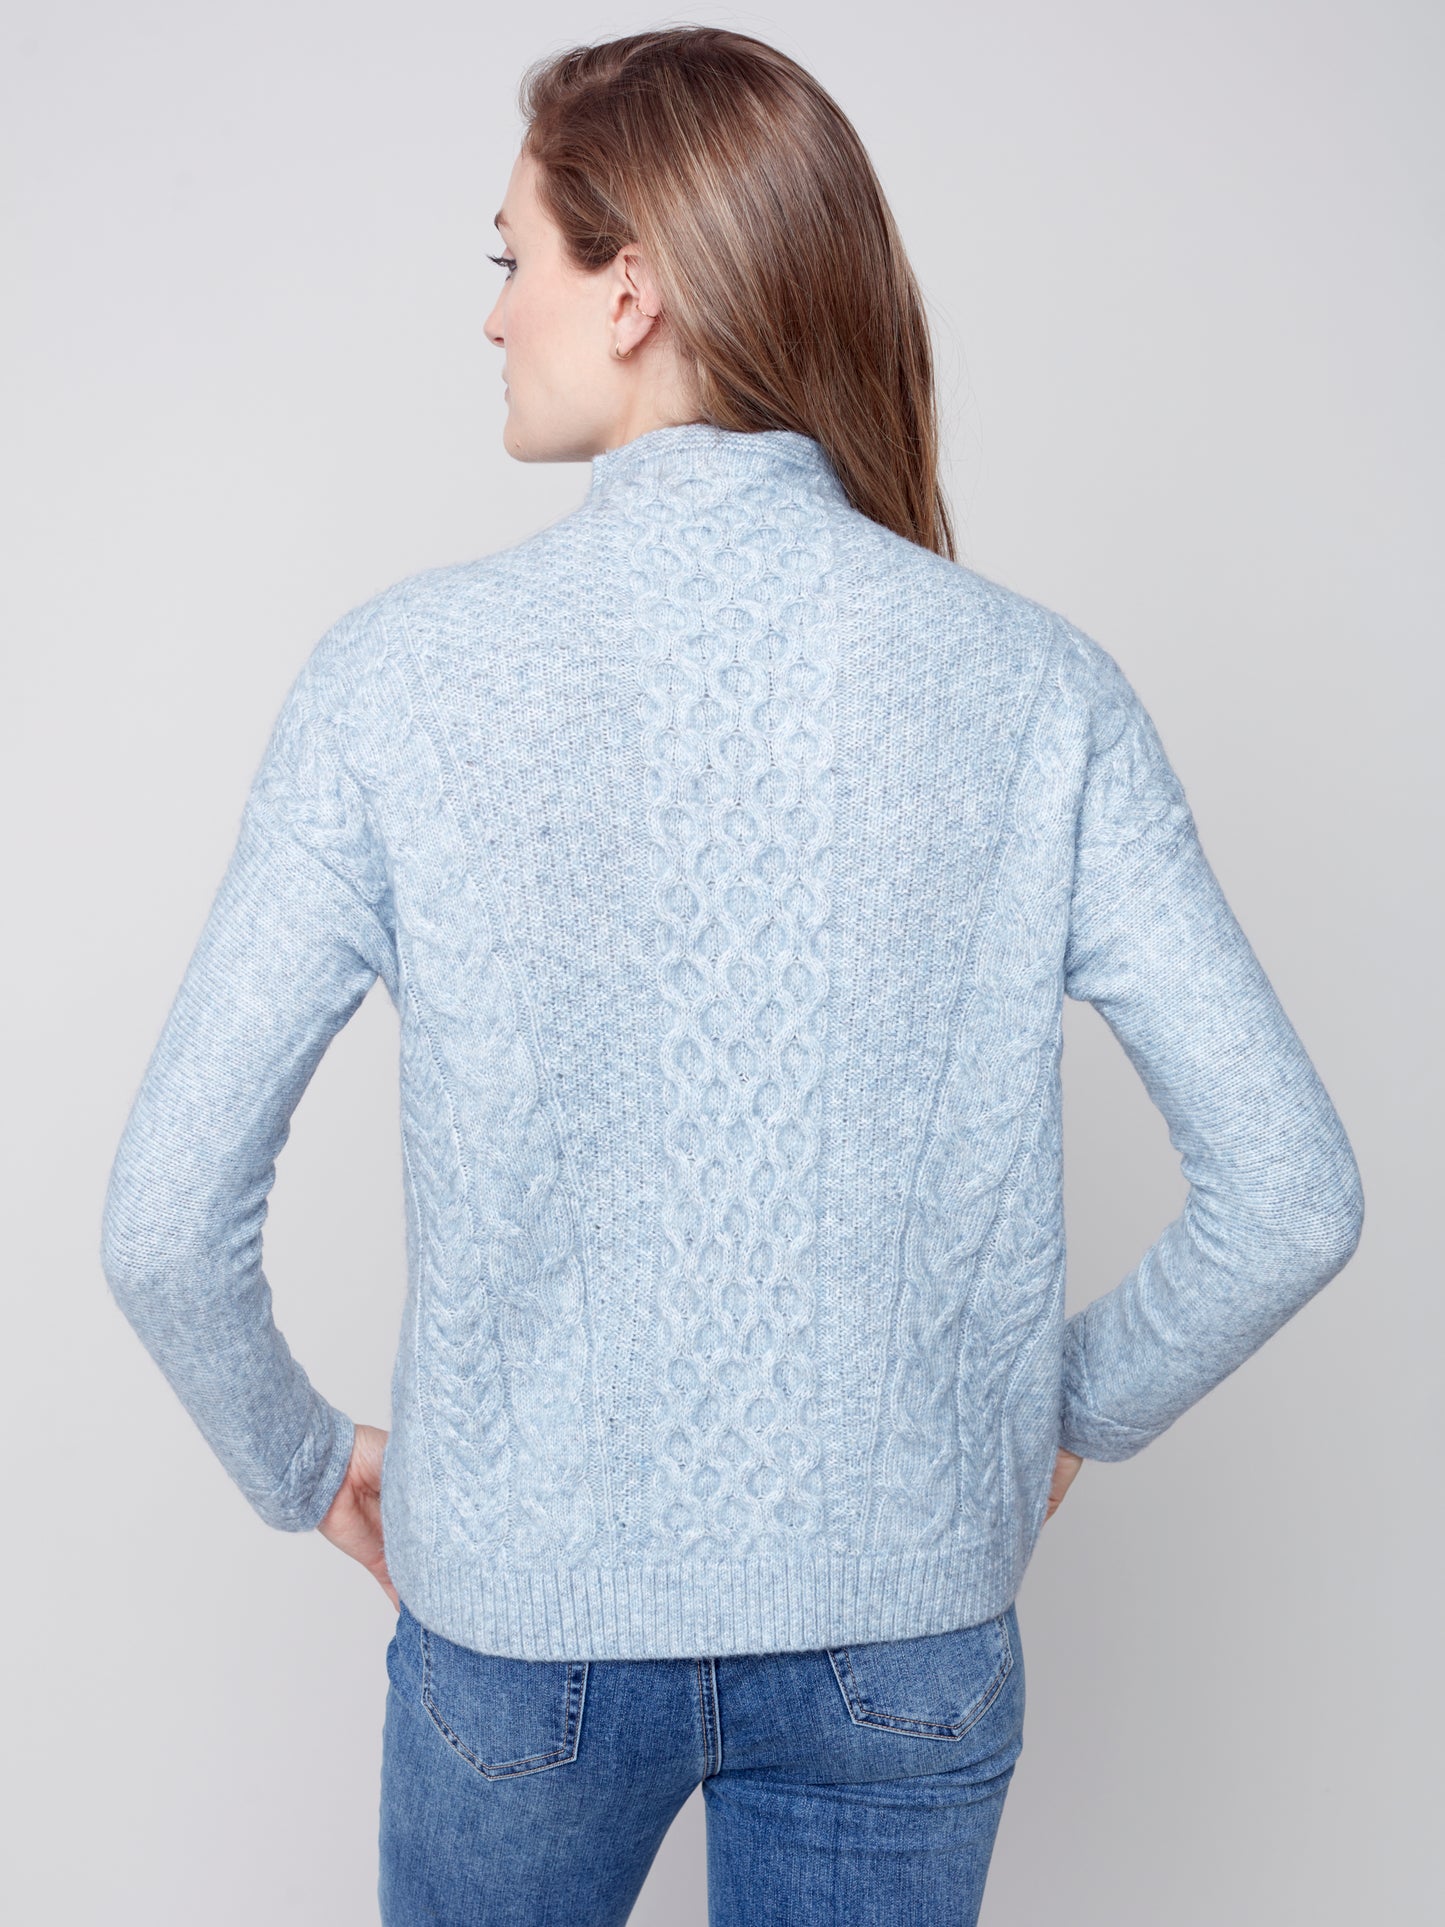 Honeycomb knit mock-neck sweater